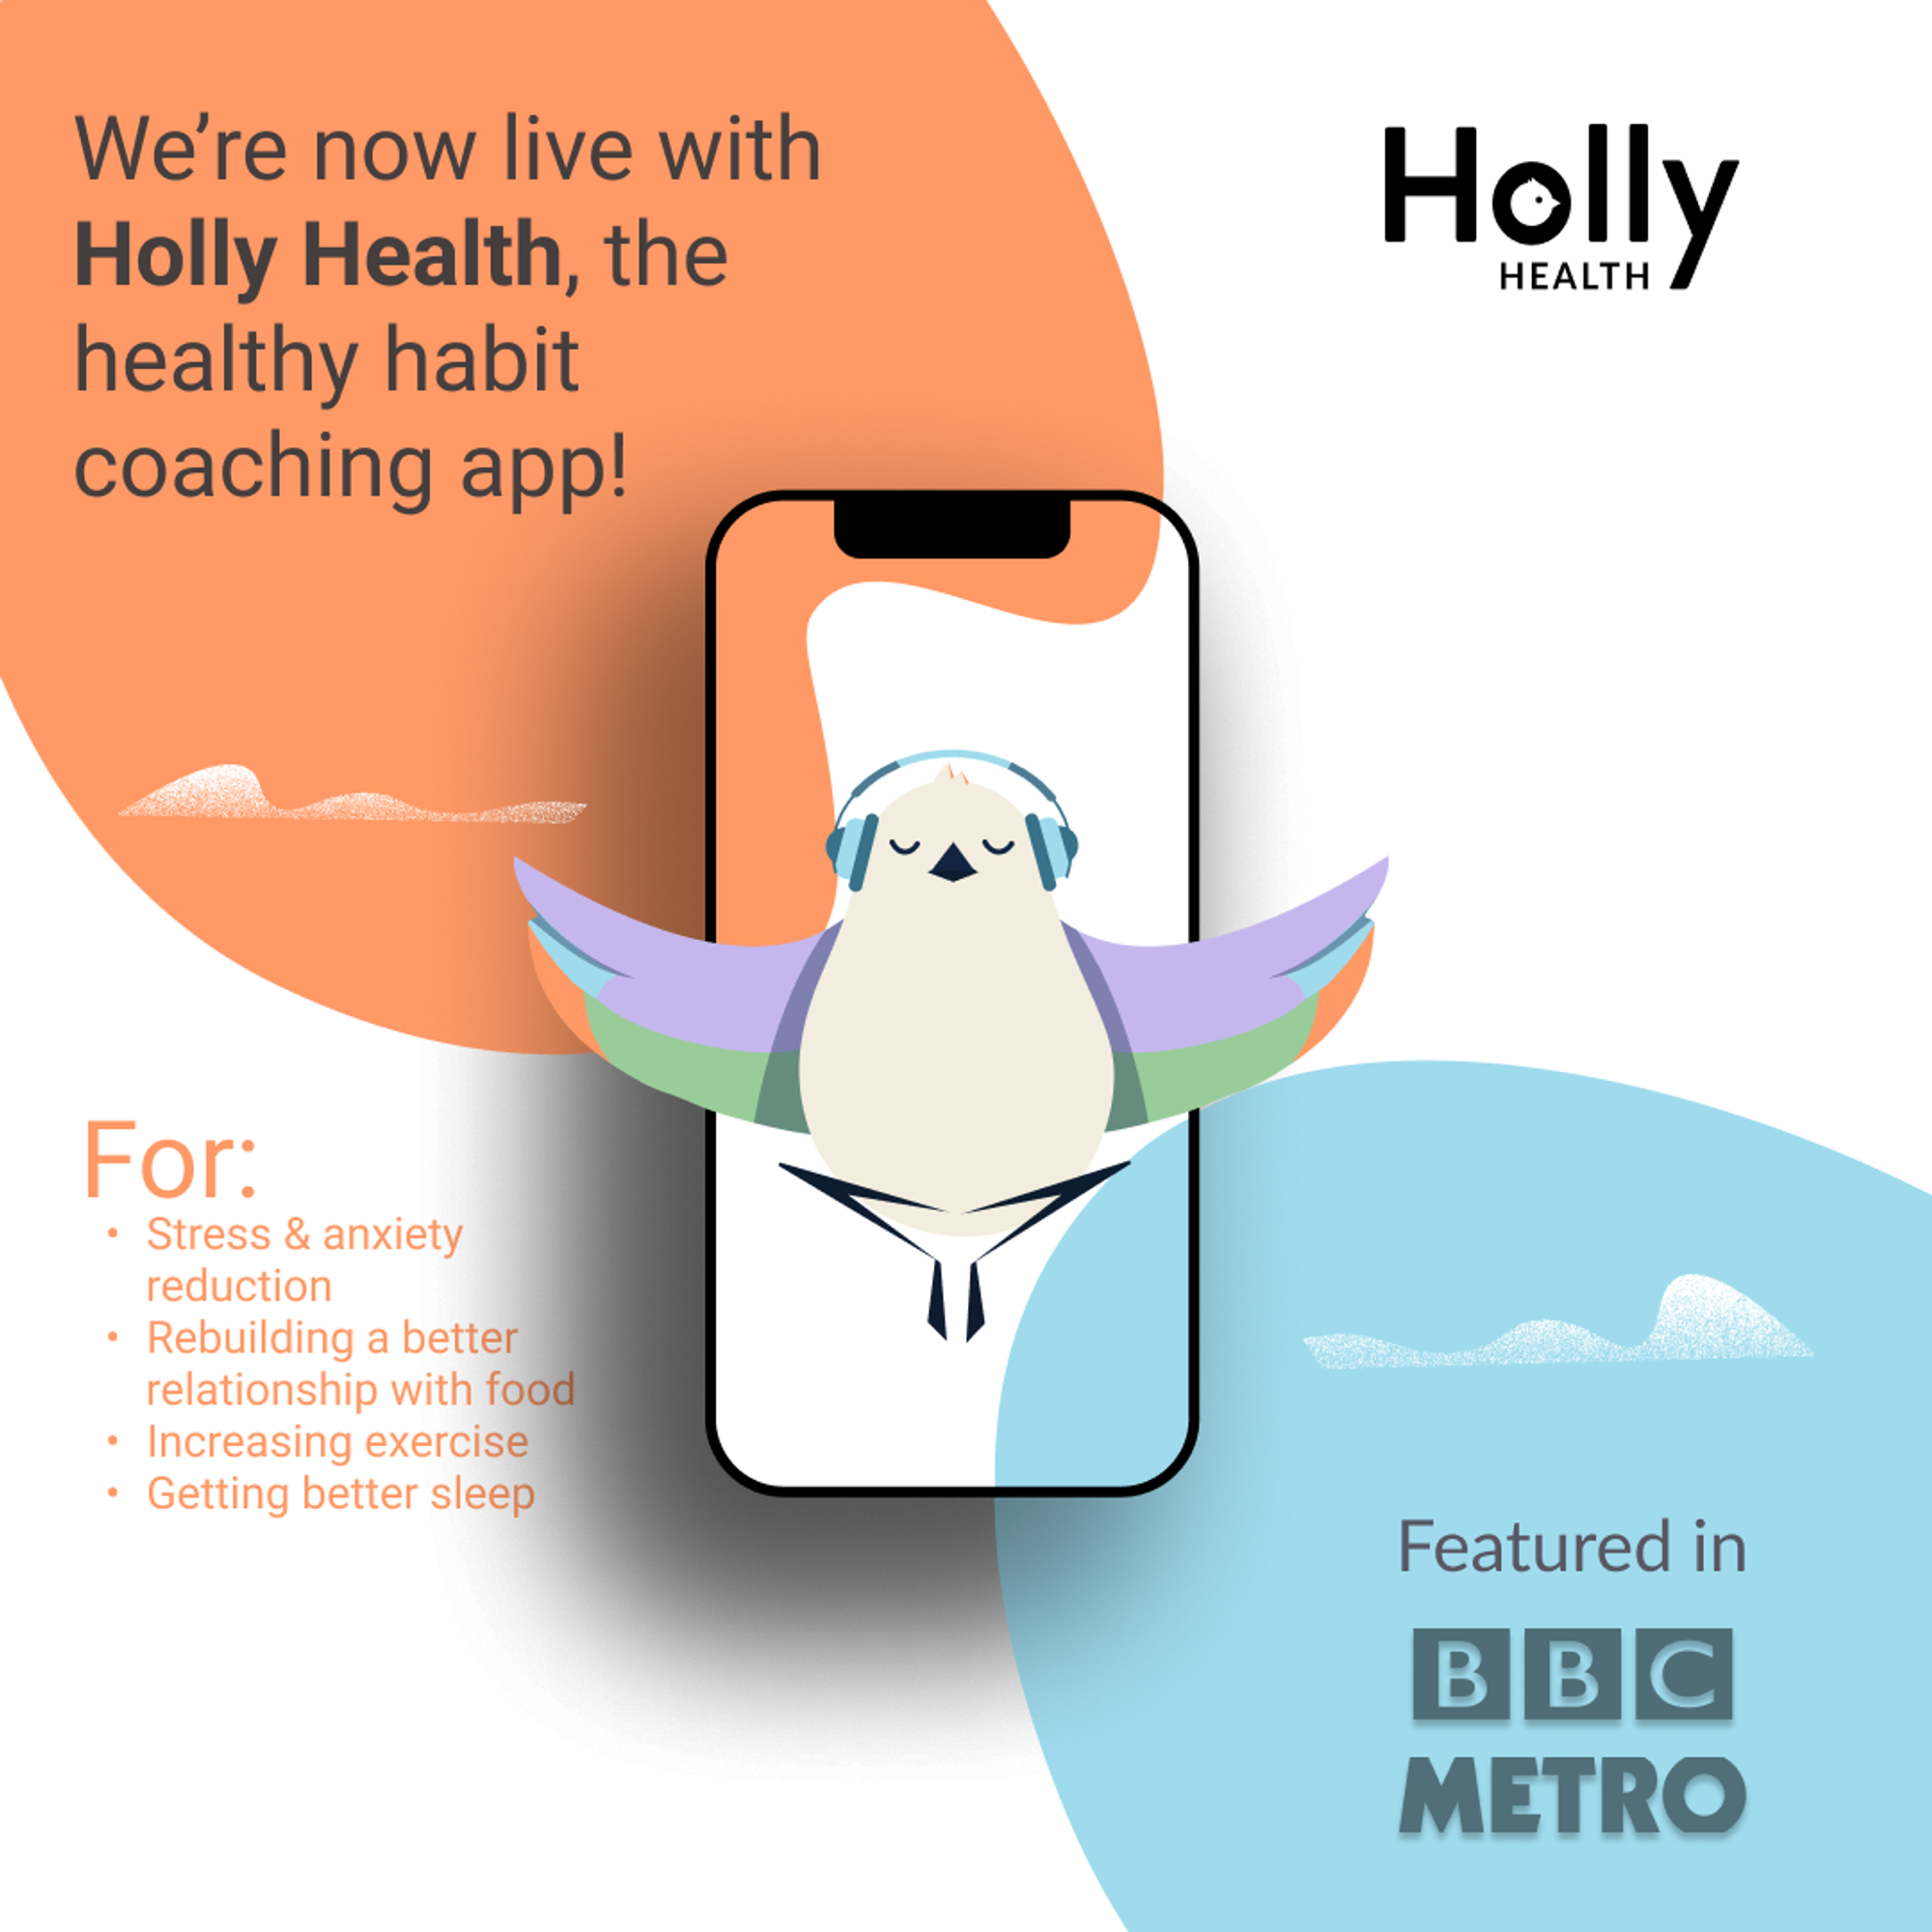 Holly health image for web-social media